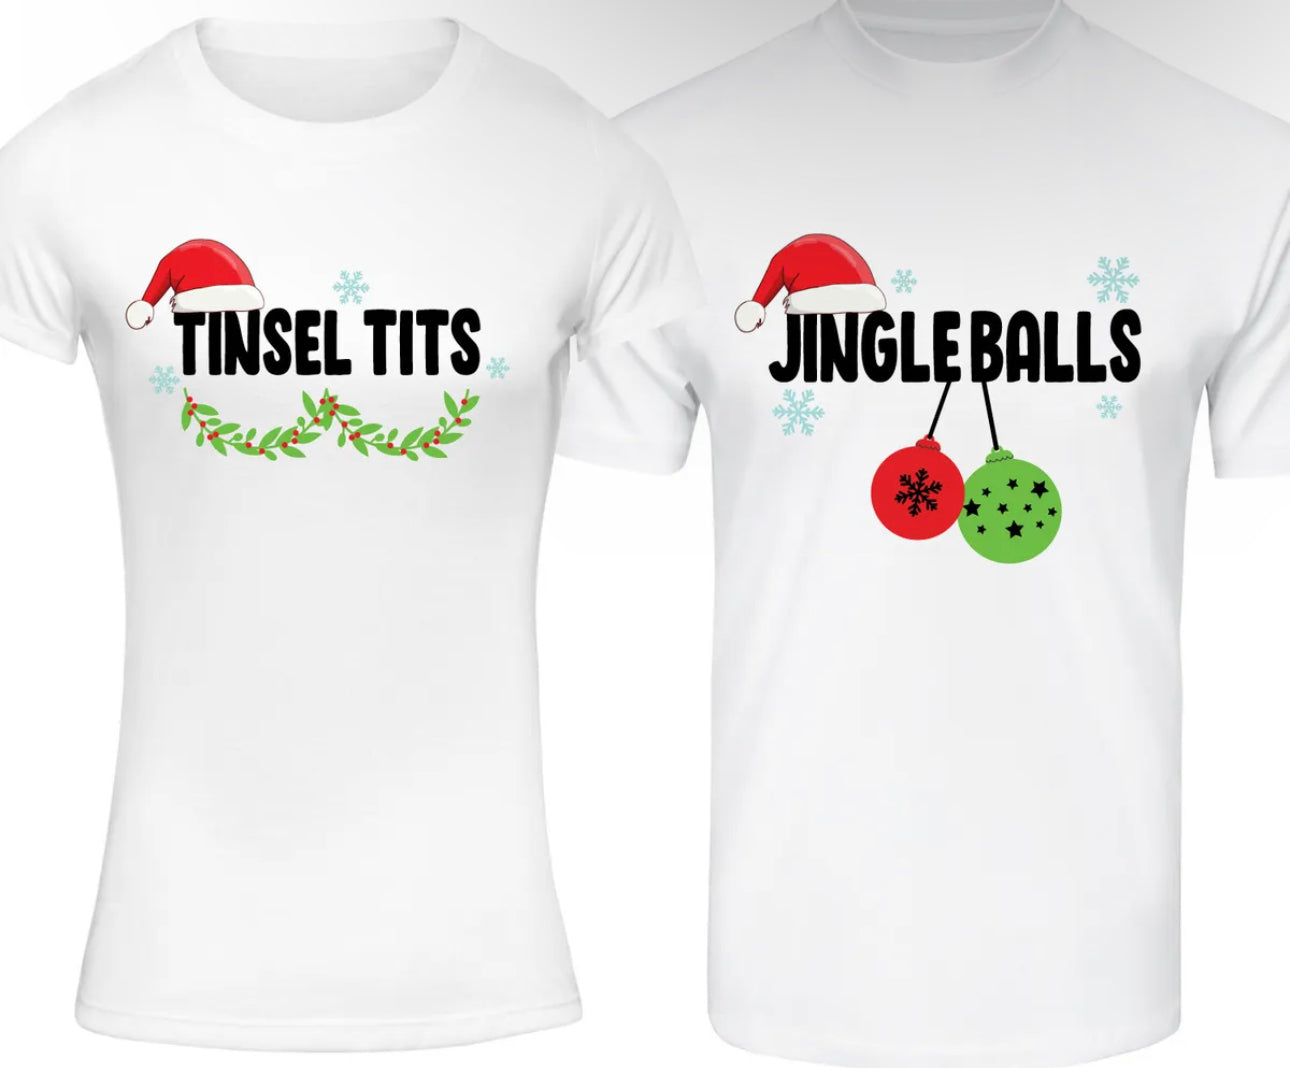 Couples Funny Christmas T-shirt (PLEASE READ DESCRIPTION CAREFULLY)